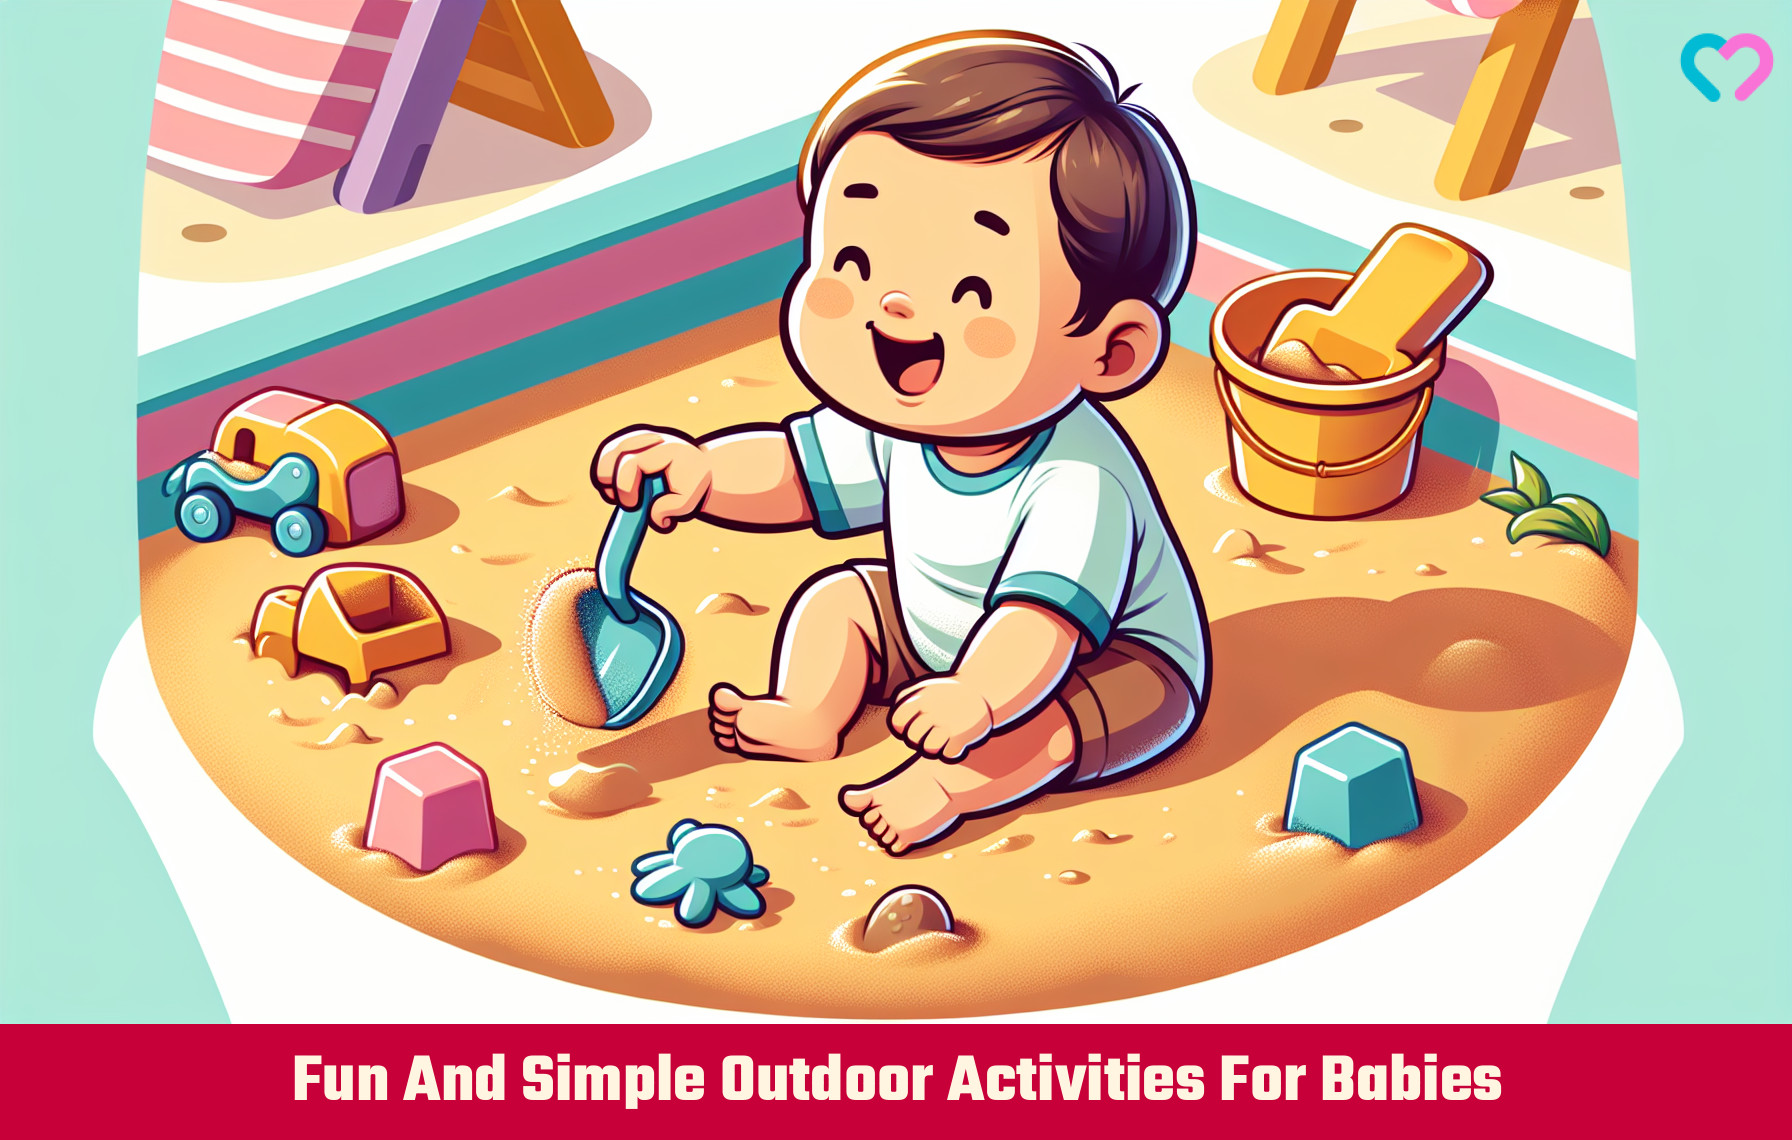 Outdoor activities for babies_illustration